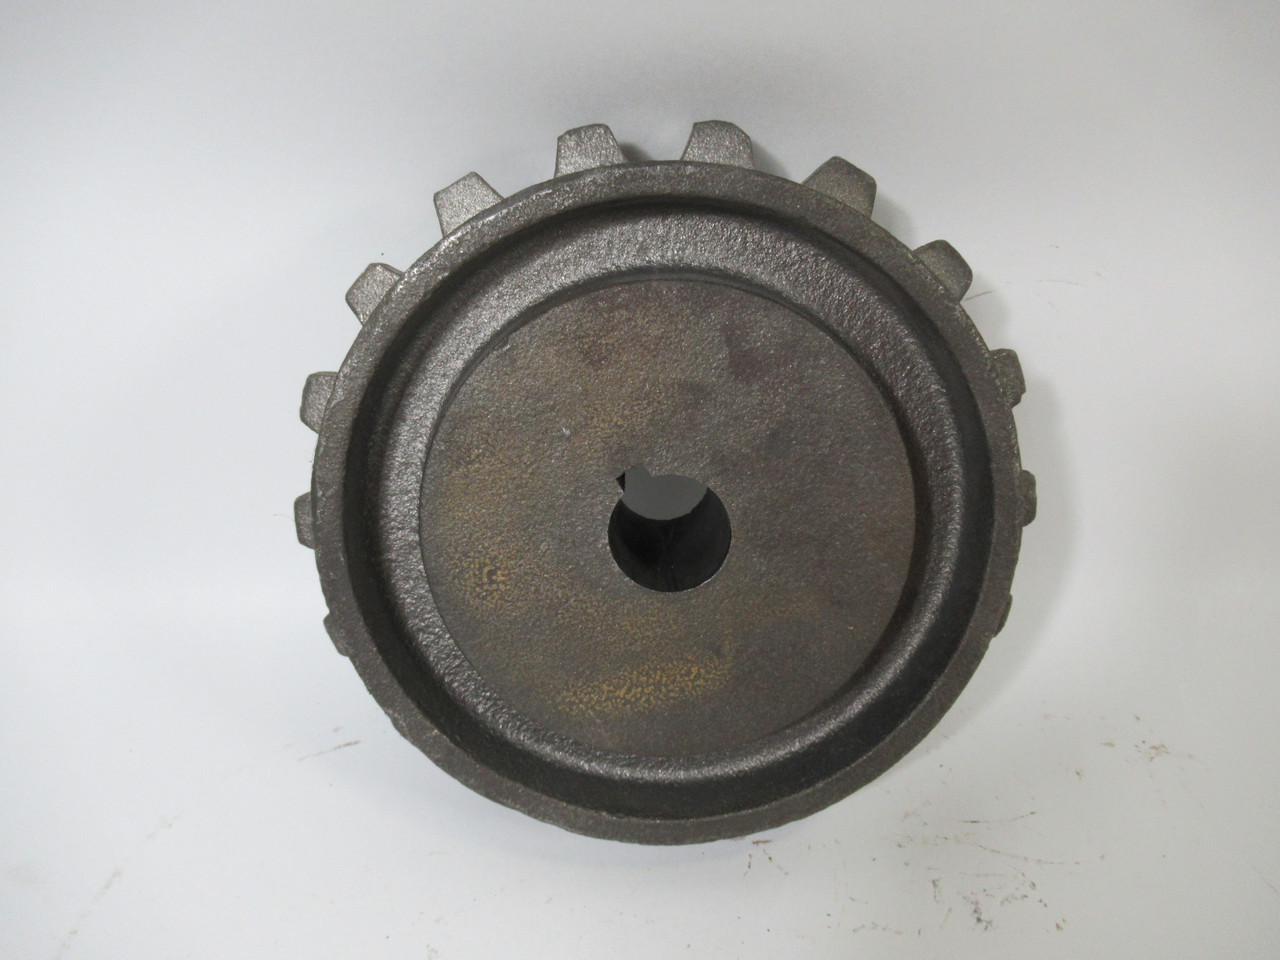 Furnace Belt Co. 6-18-STD Cast Iron Sprocket 1"ID 18T 1x1" Belt 6.160"P USED